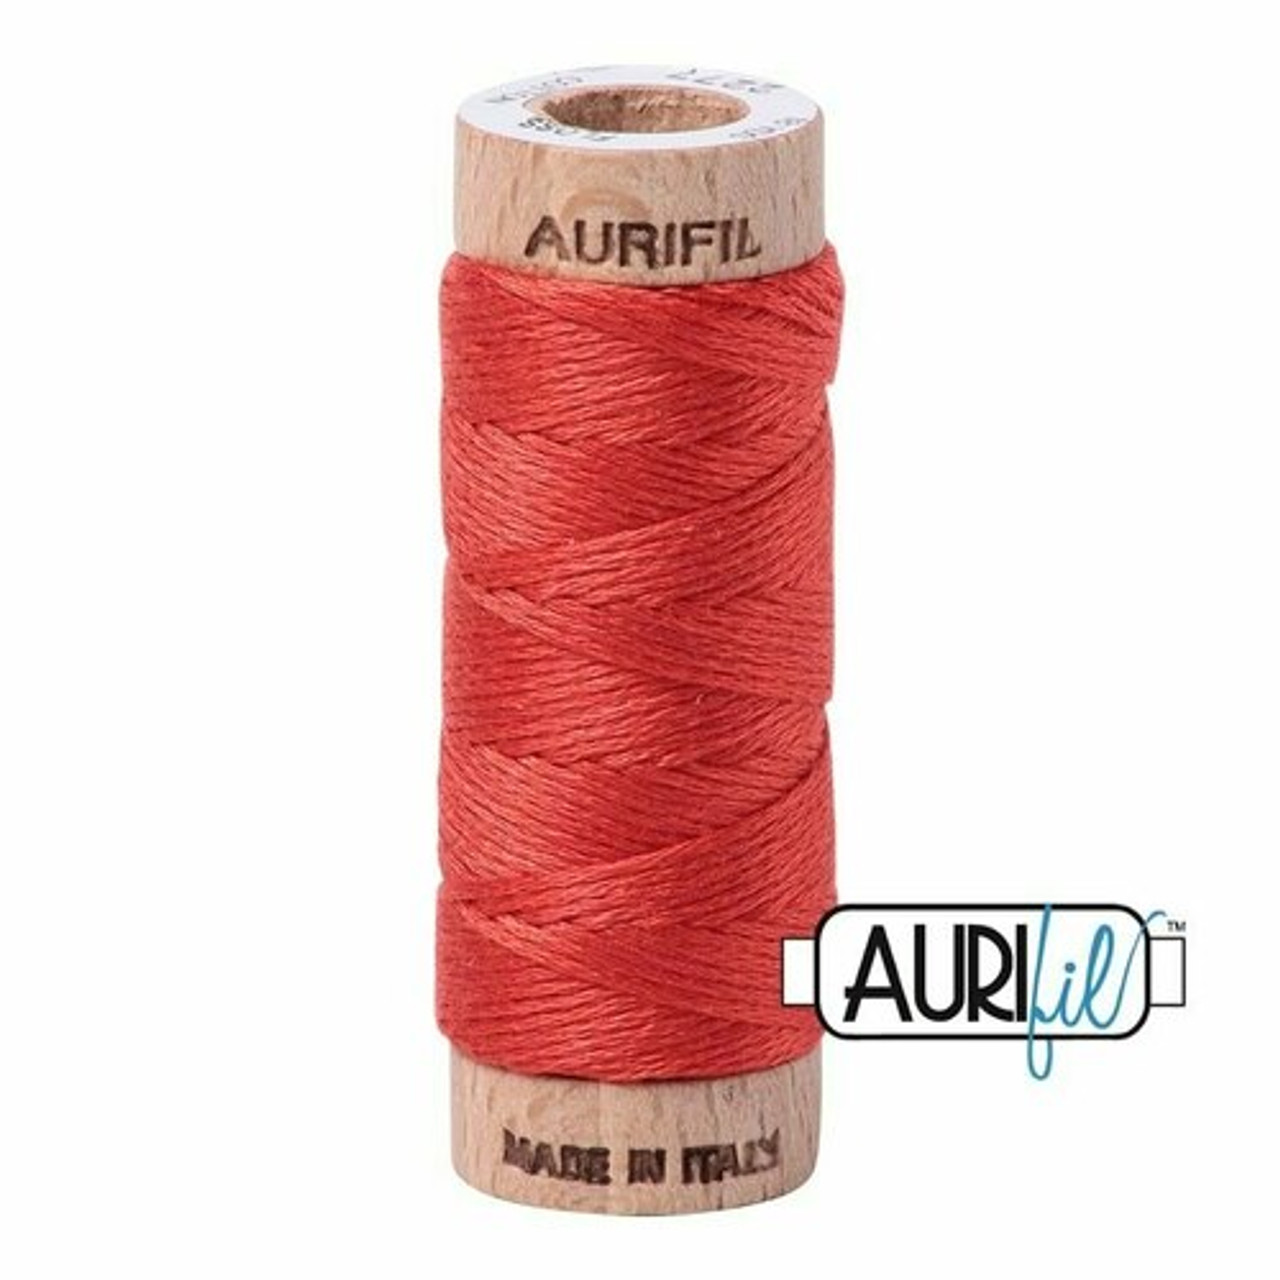 Aurifil 2277 - Light Orange Red